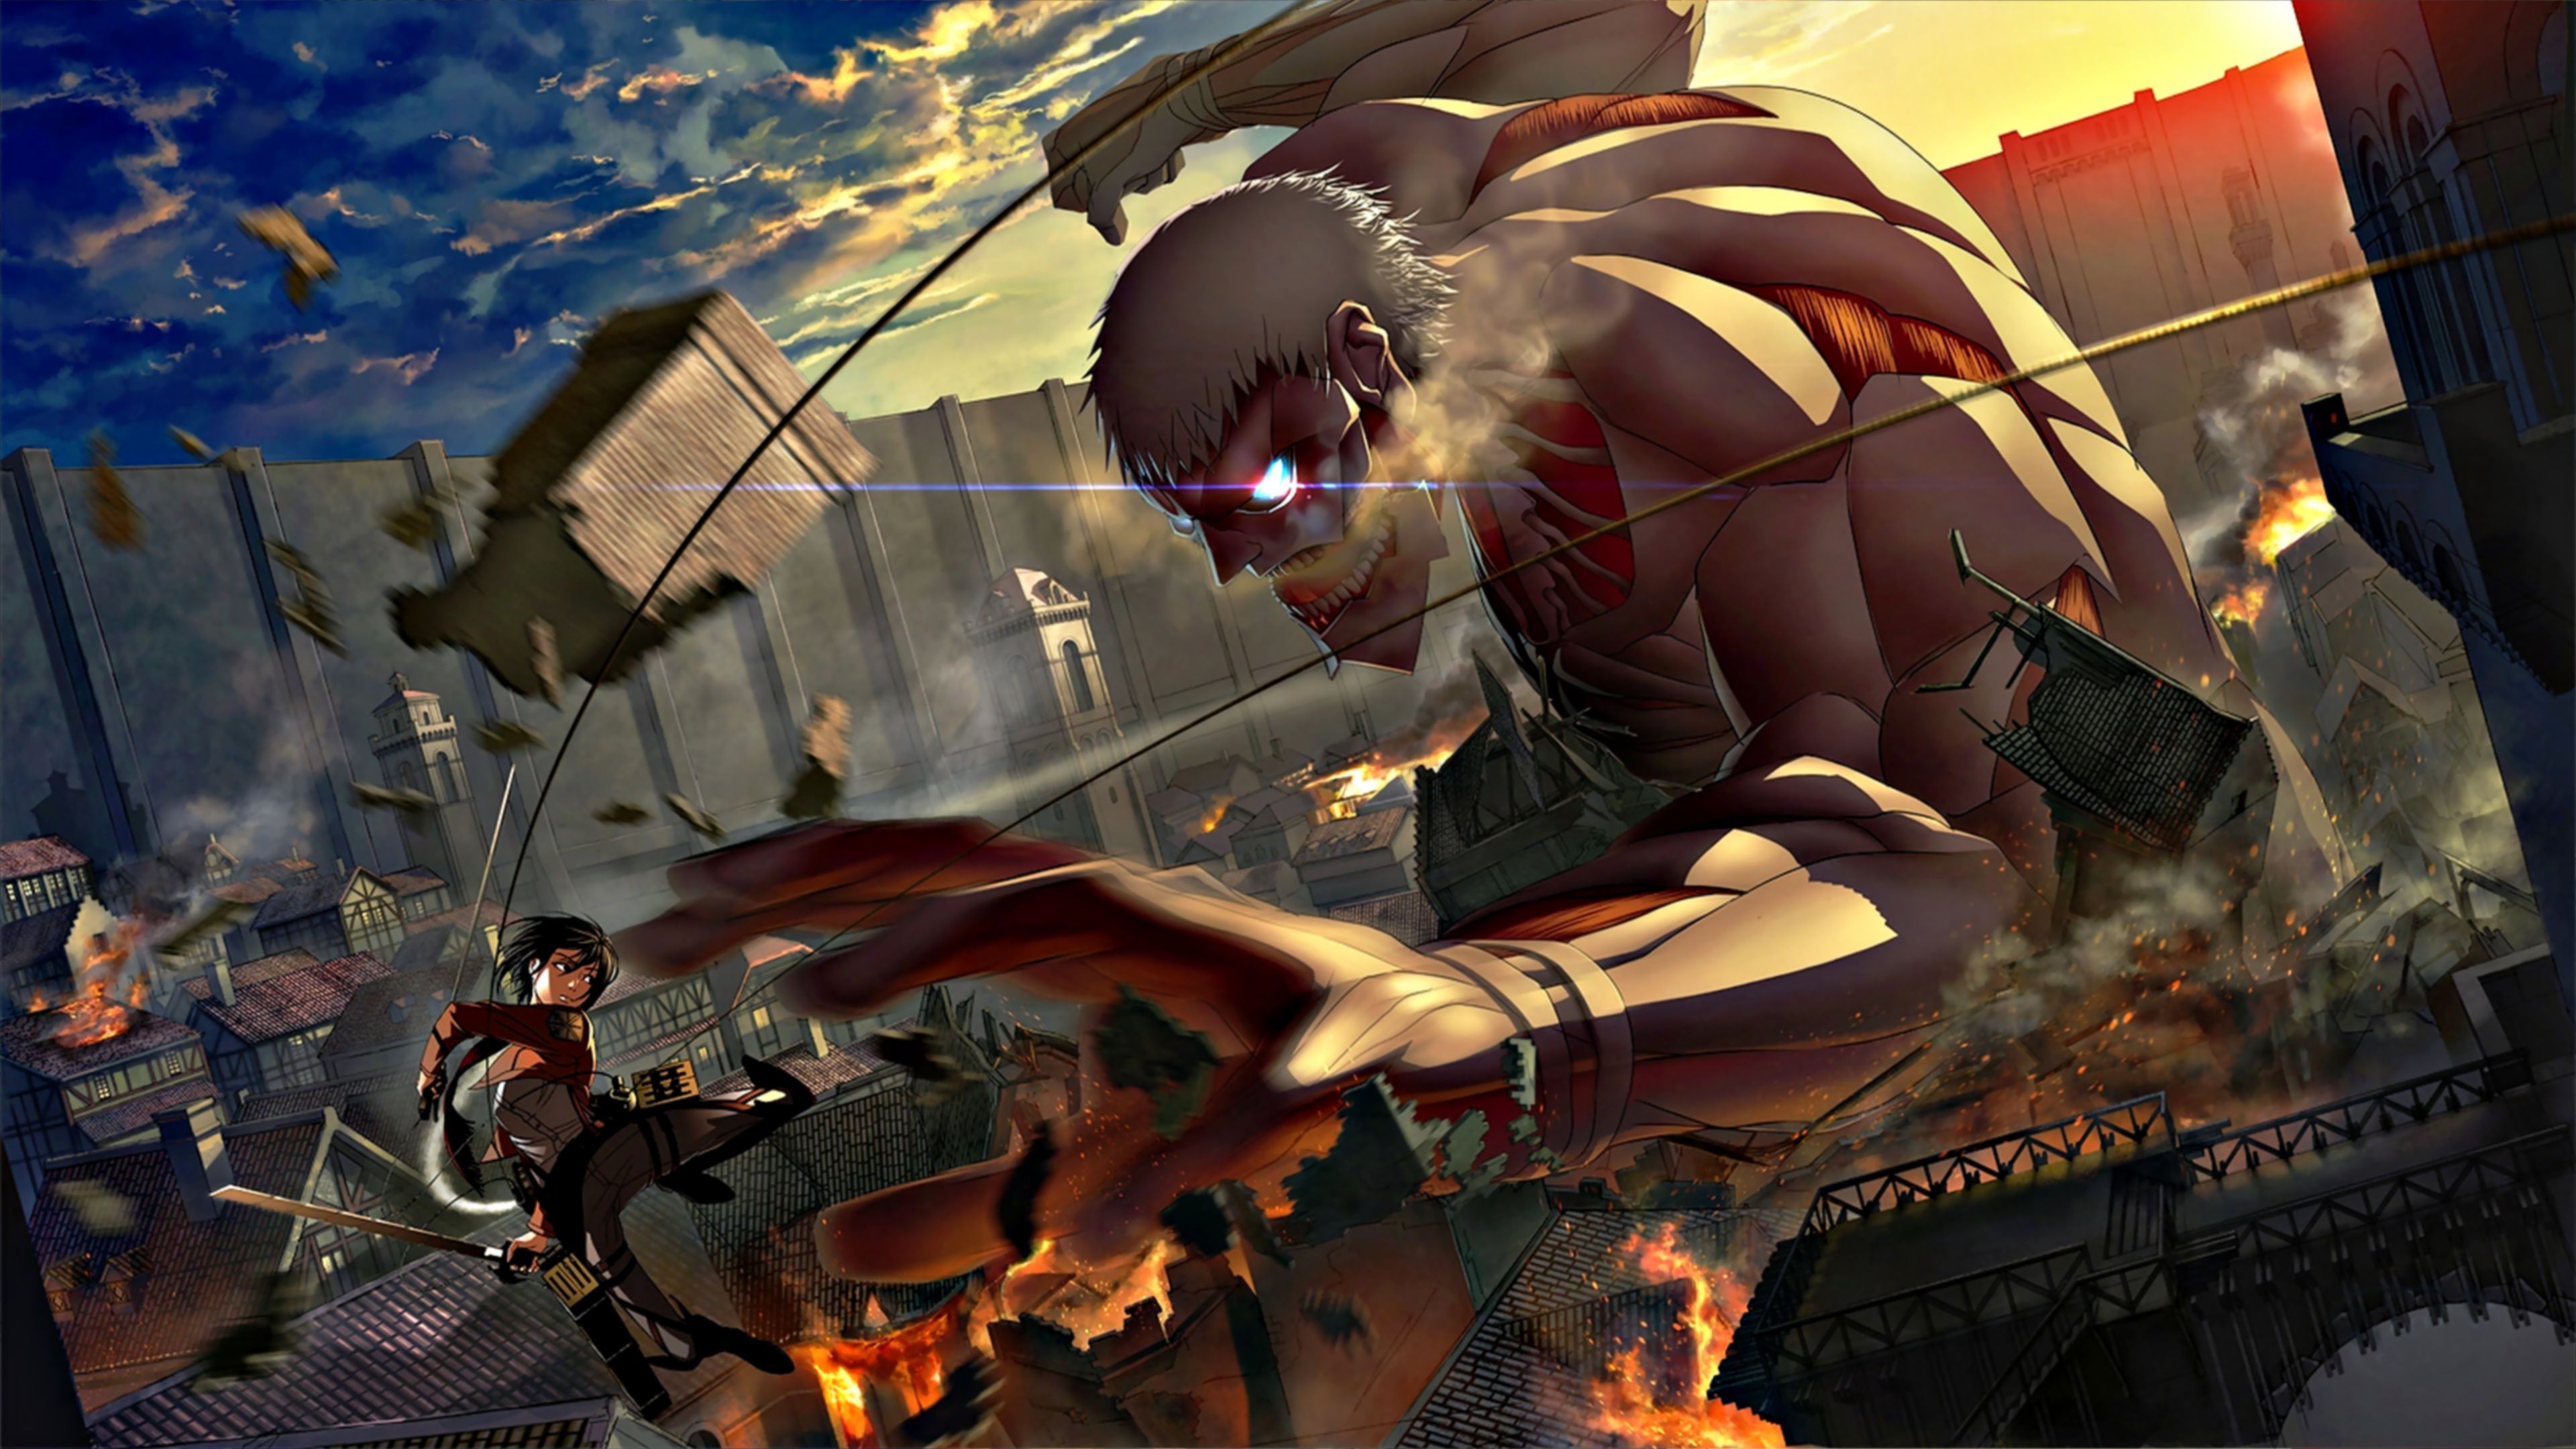 Attack on Titan Final Season Anime Characters Wallpaper 4K #7.3182